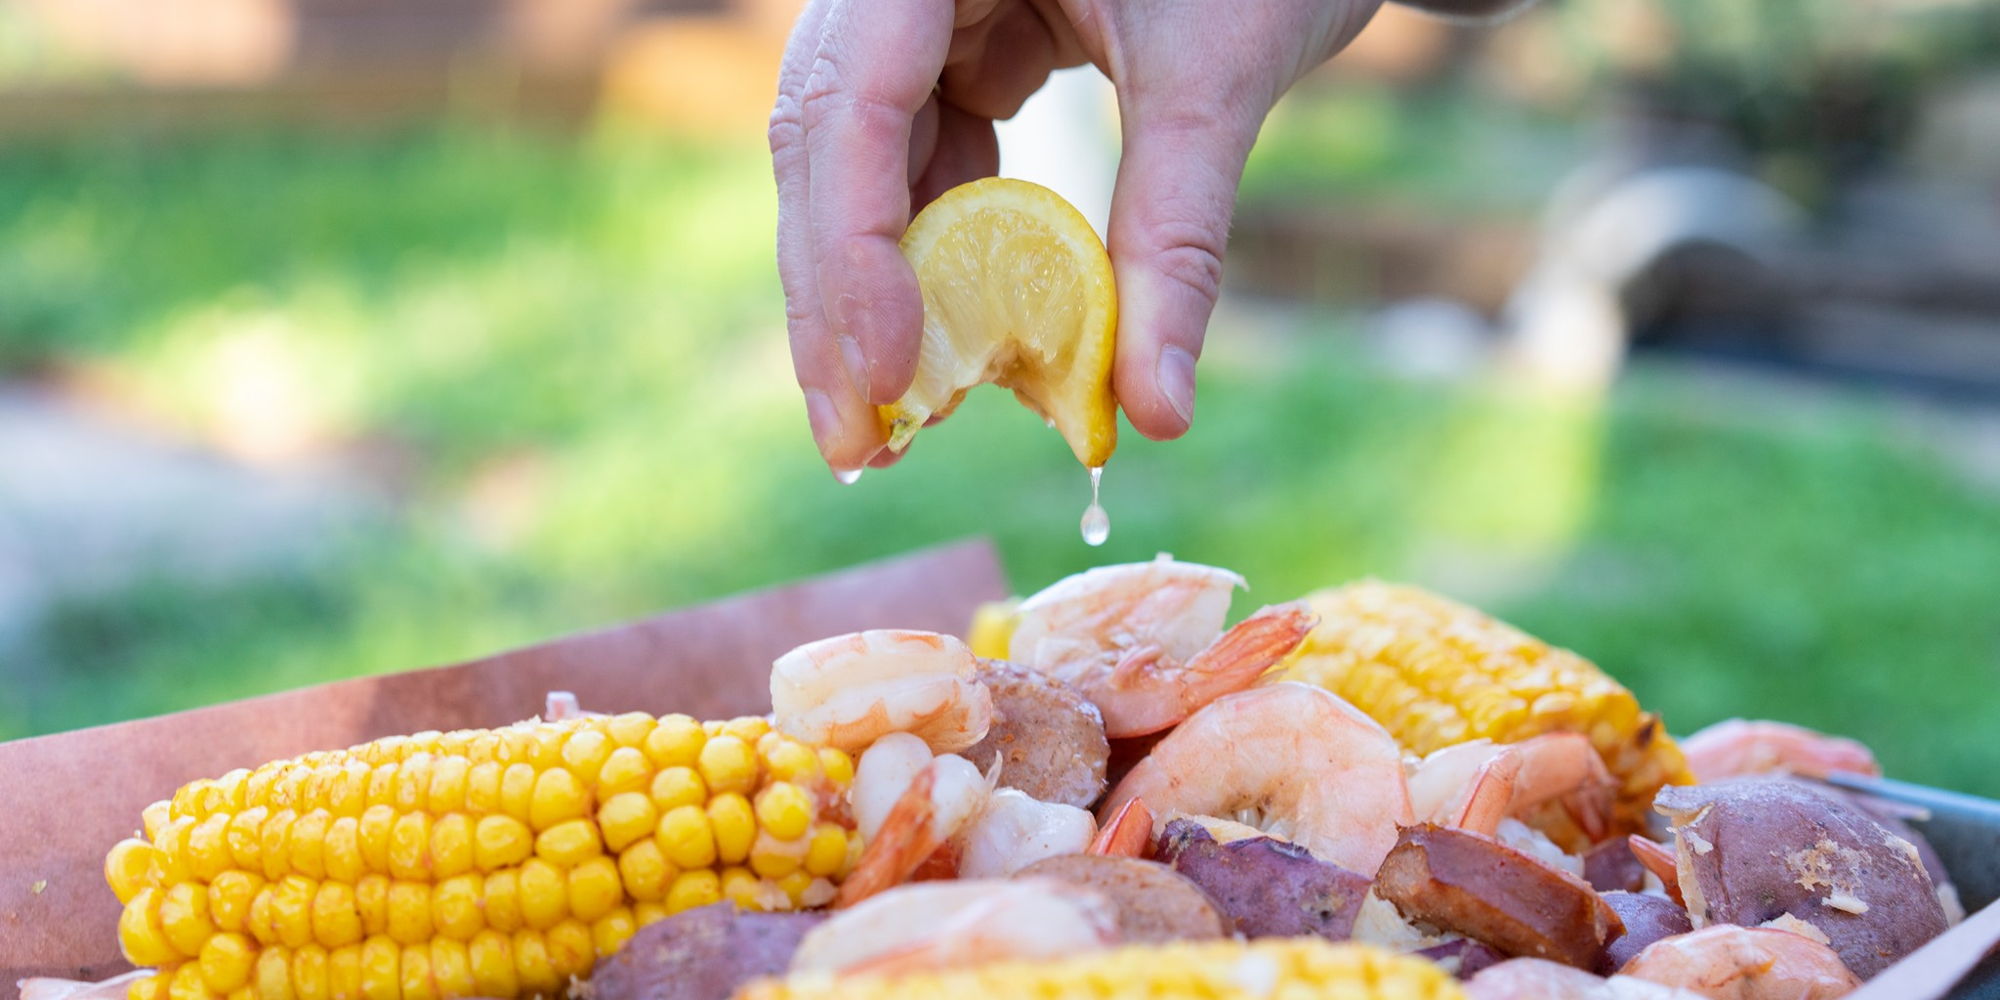 Cajun Shrimp Boil At Revelry On The Blvd promotional image